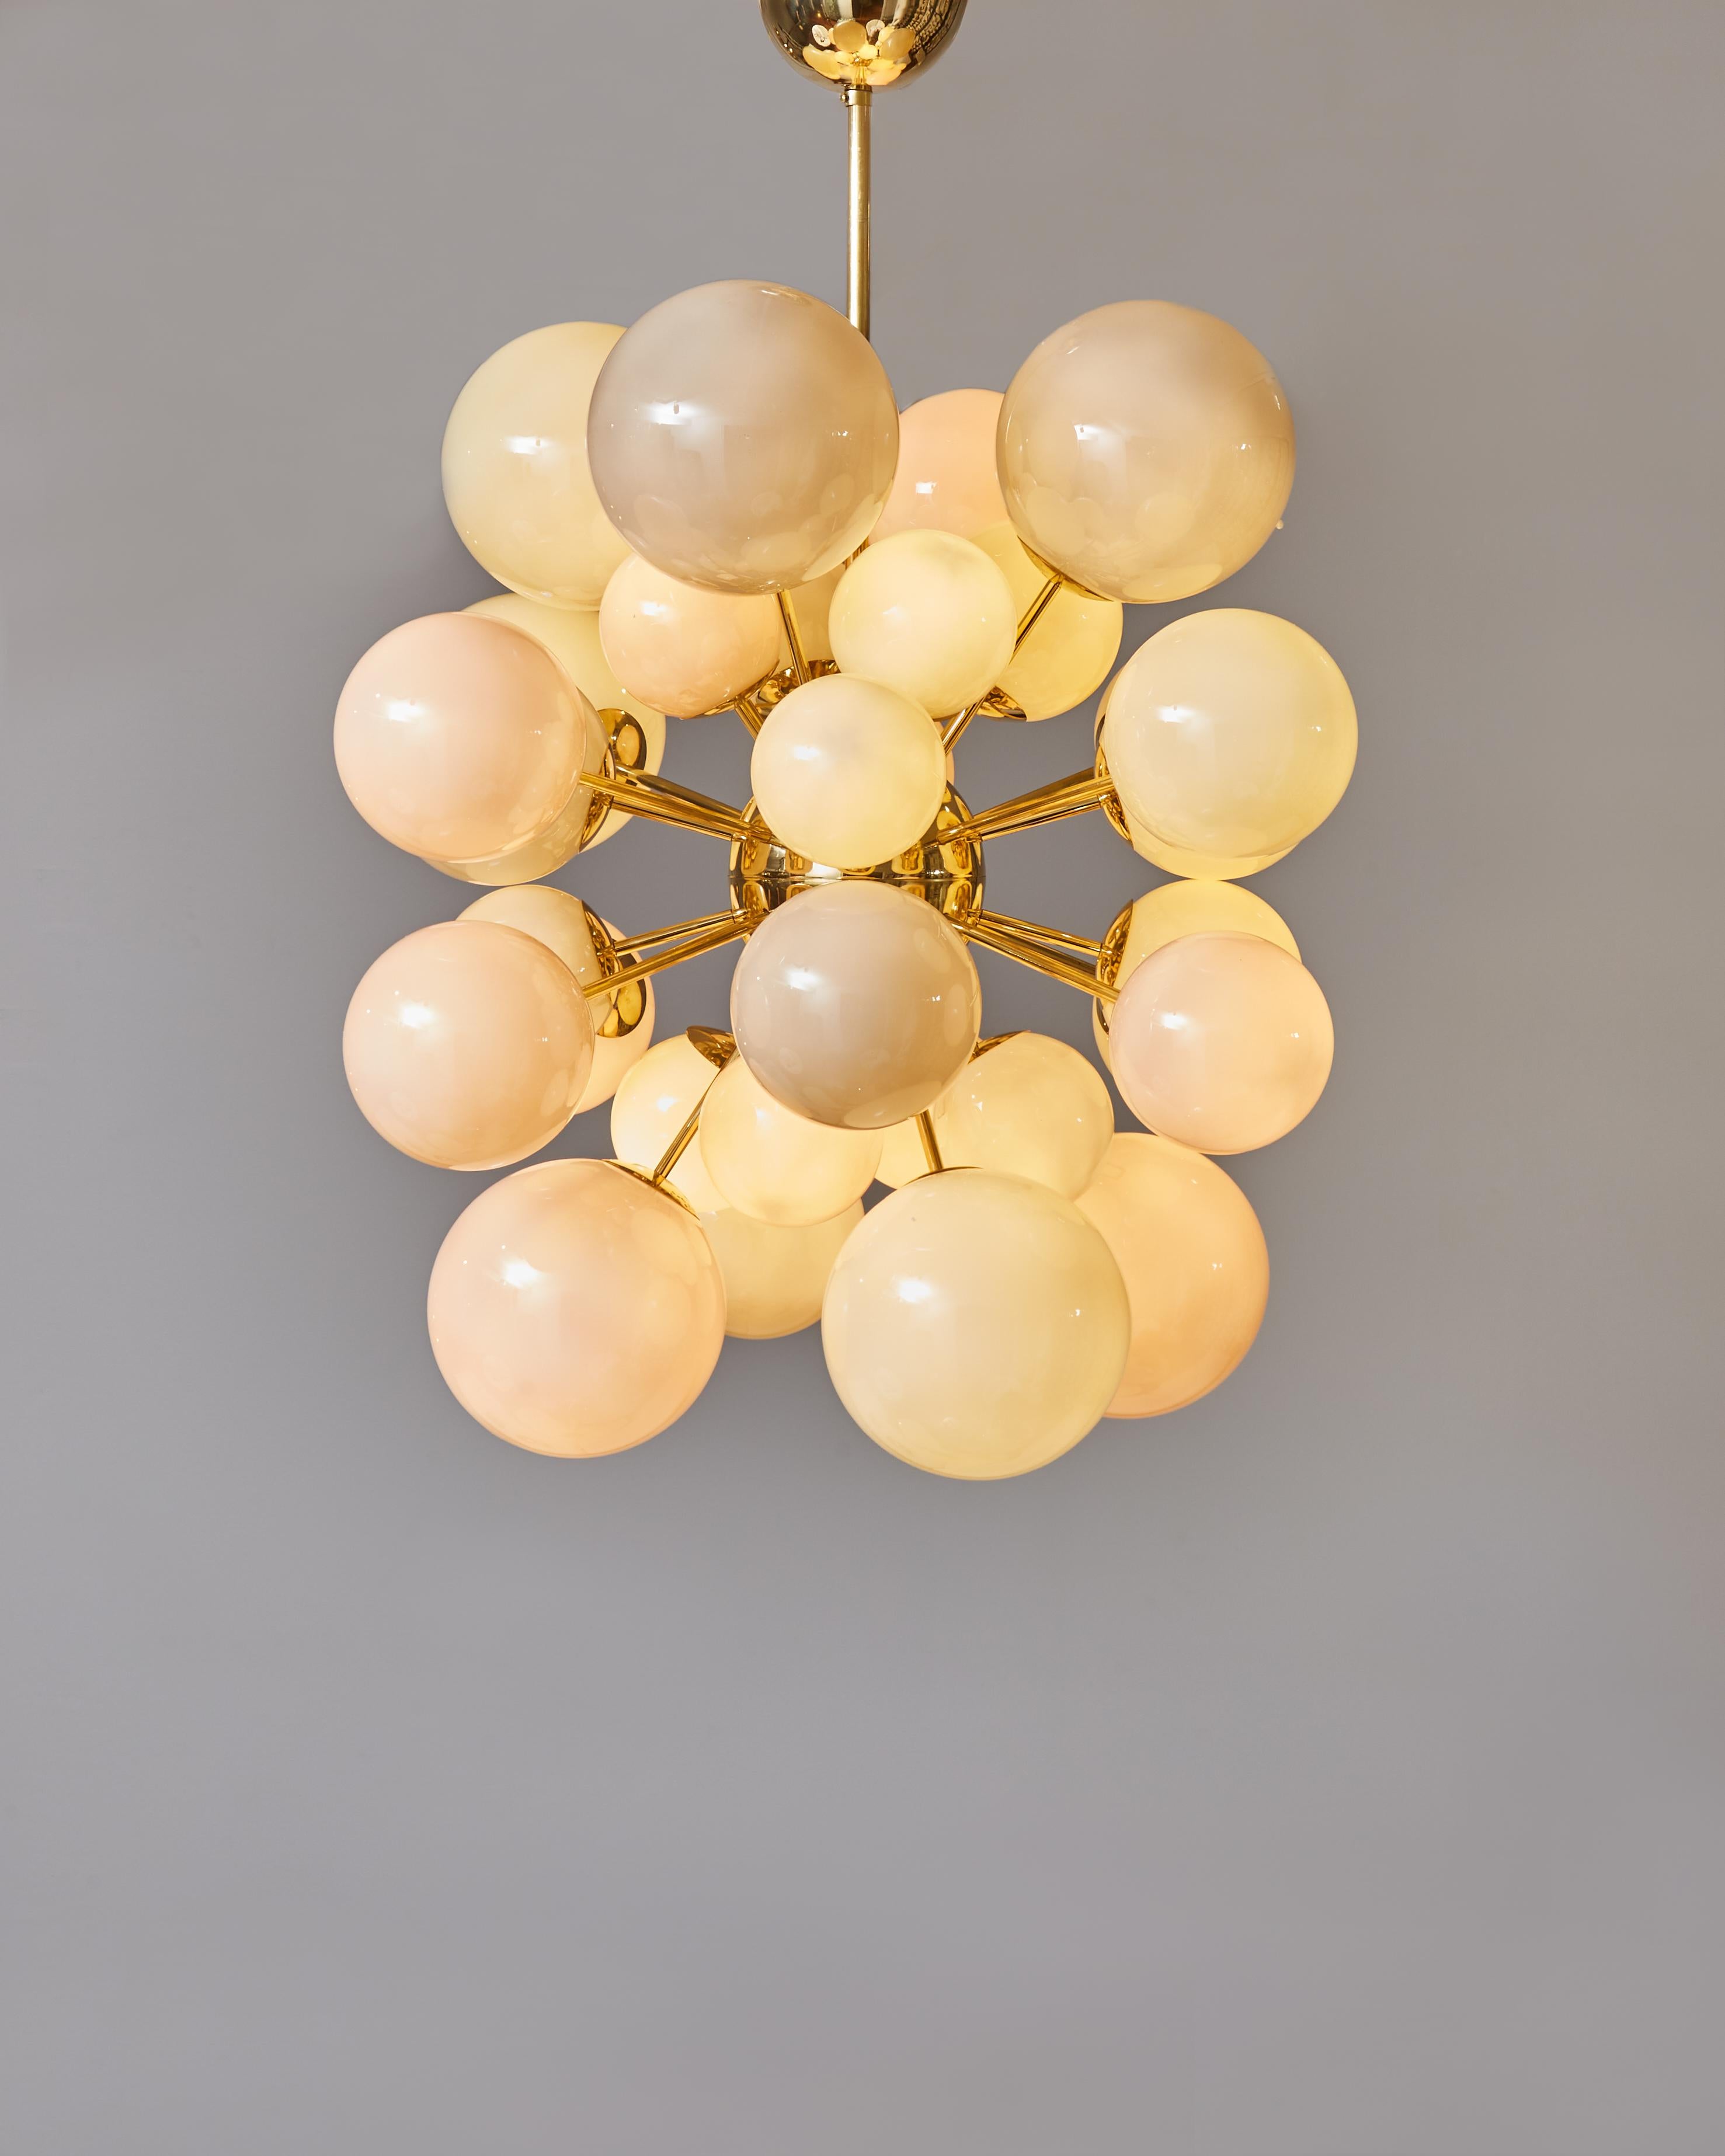 Superb sputnik chandelier in bras with multicolored opaline glass globes by Studio Glustin.
 